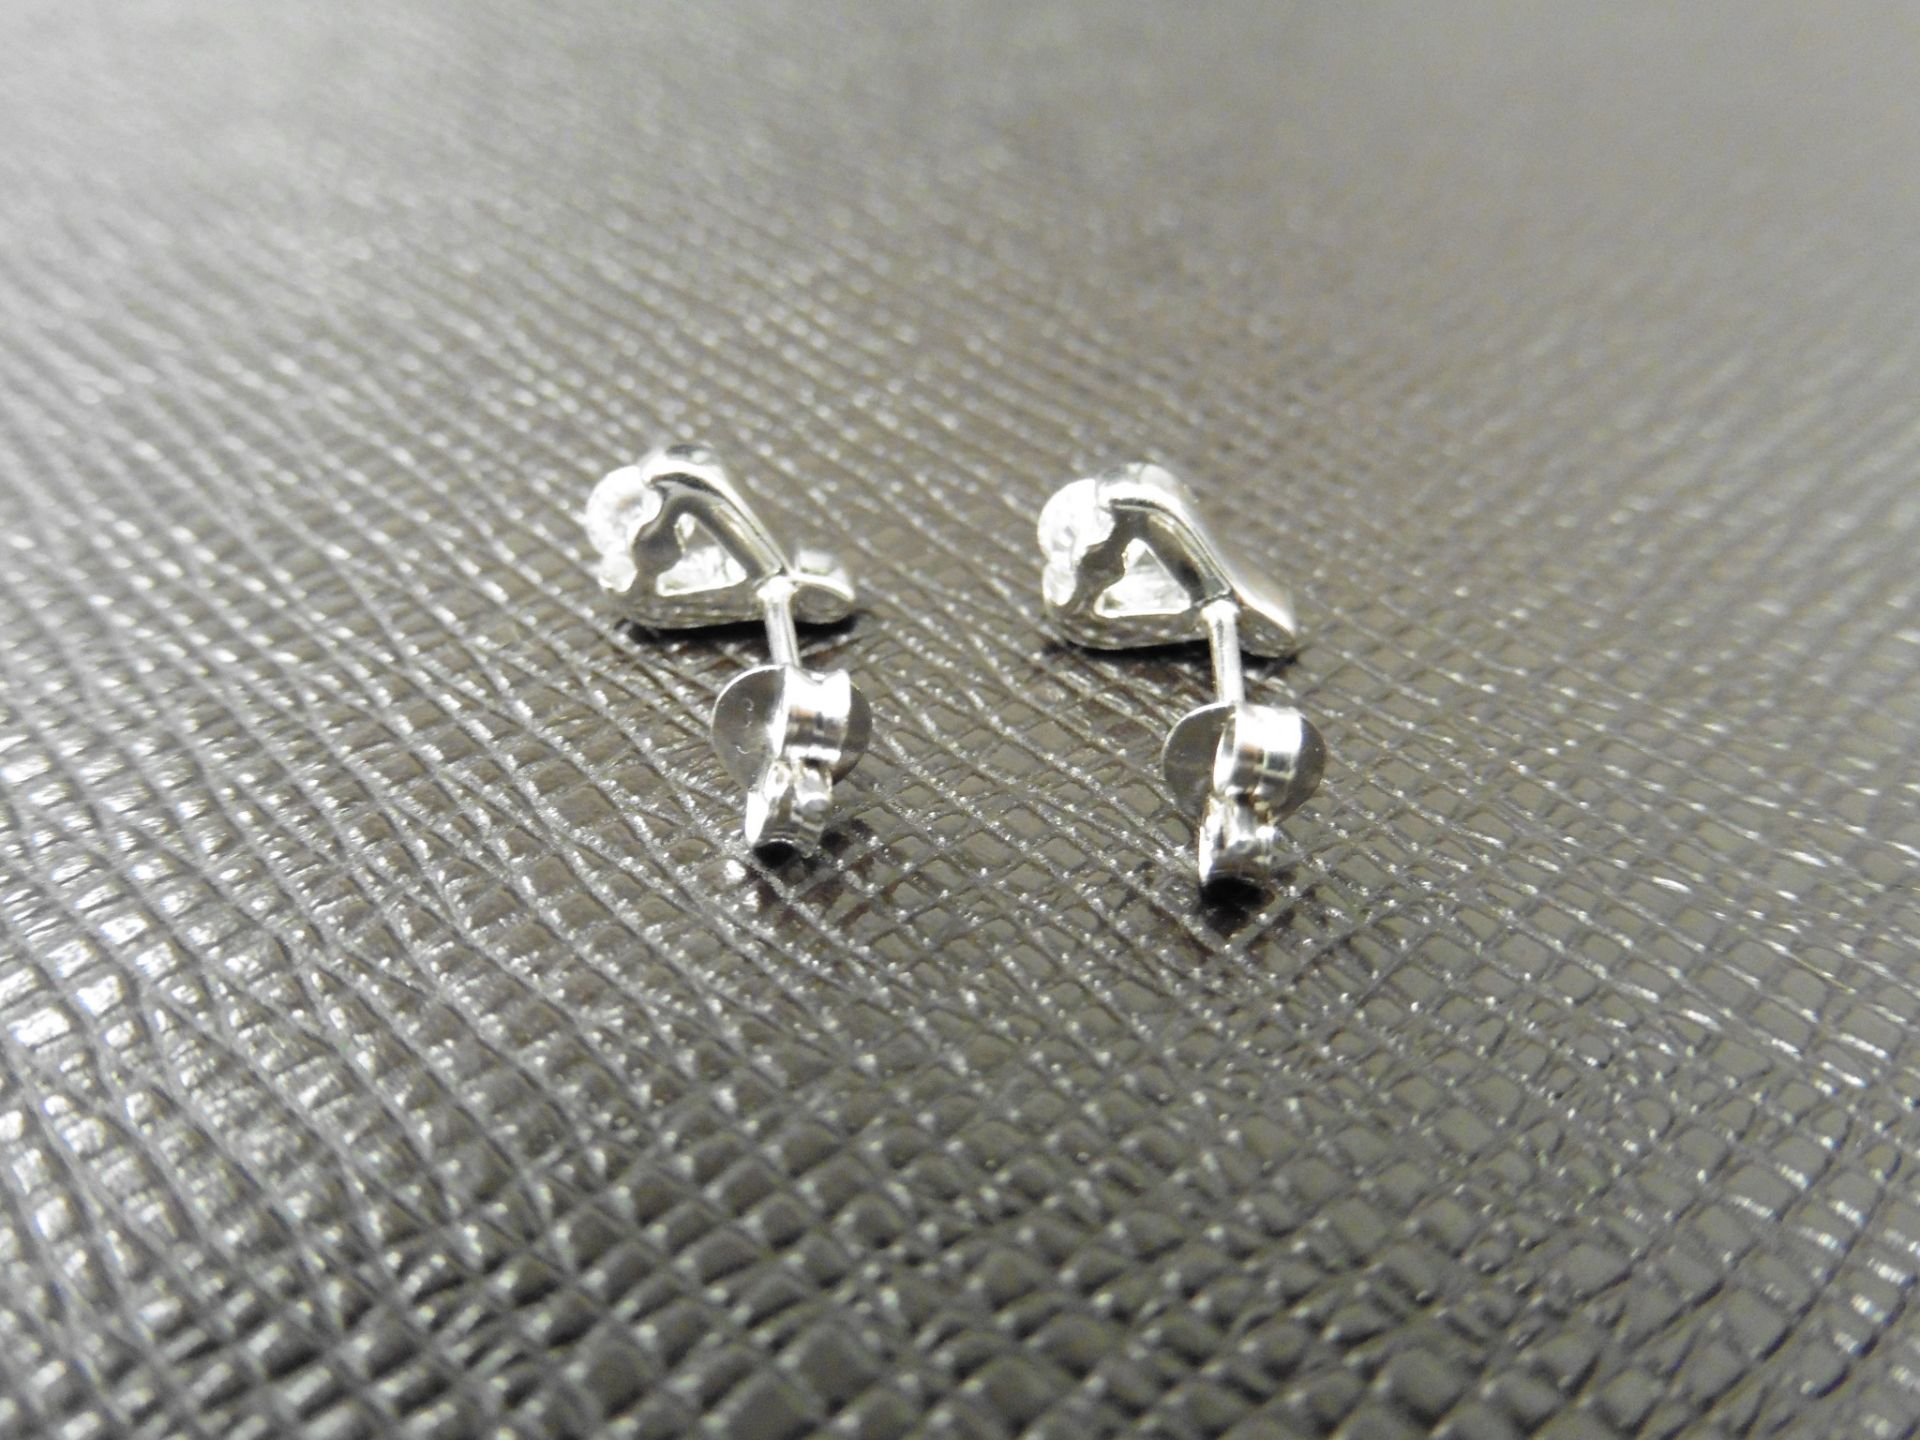 0.10ct diamond tear drop earrings set in platinum 950. 2 small brilliant cut diamonds, H colourand - Image 2 of 3